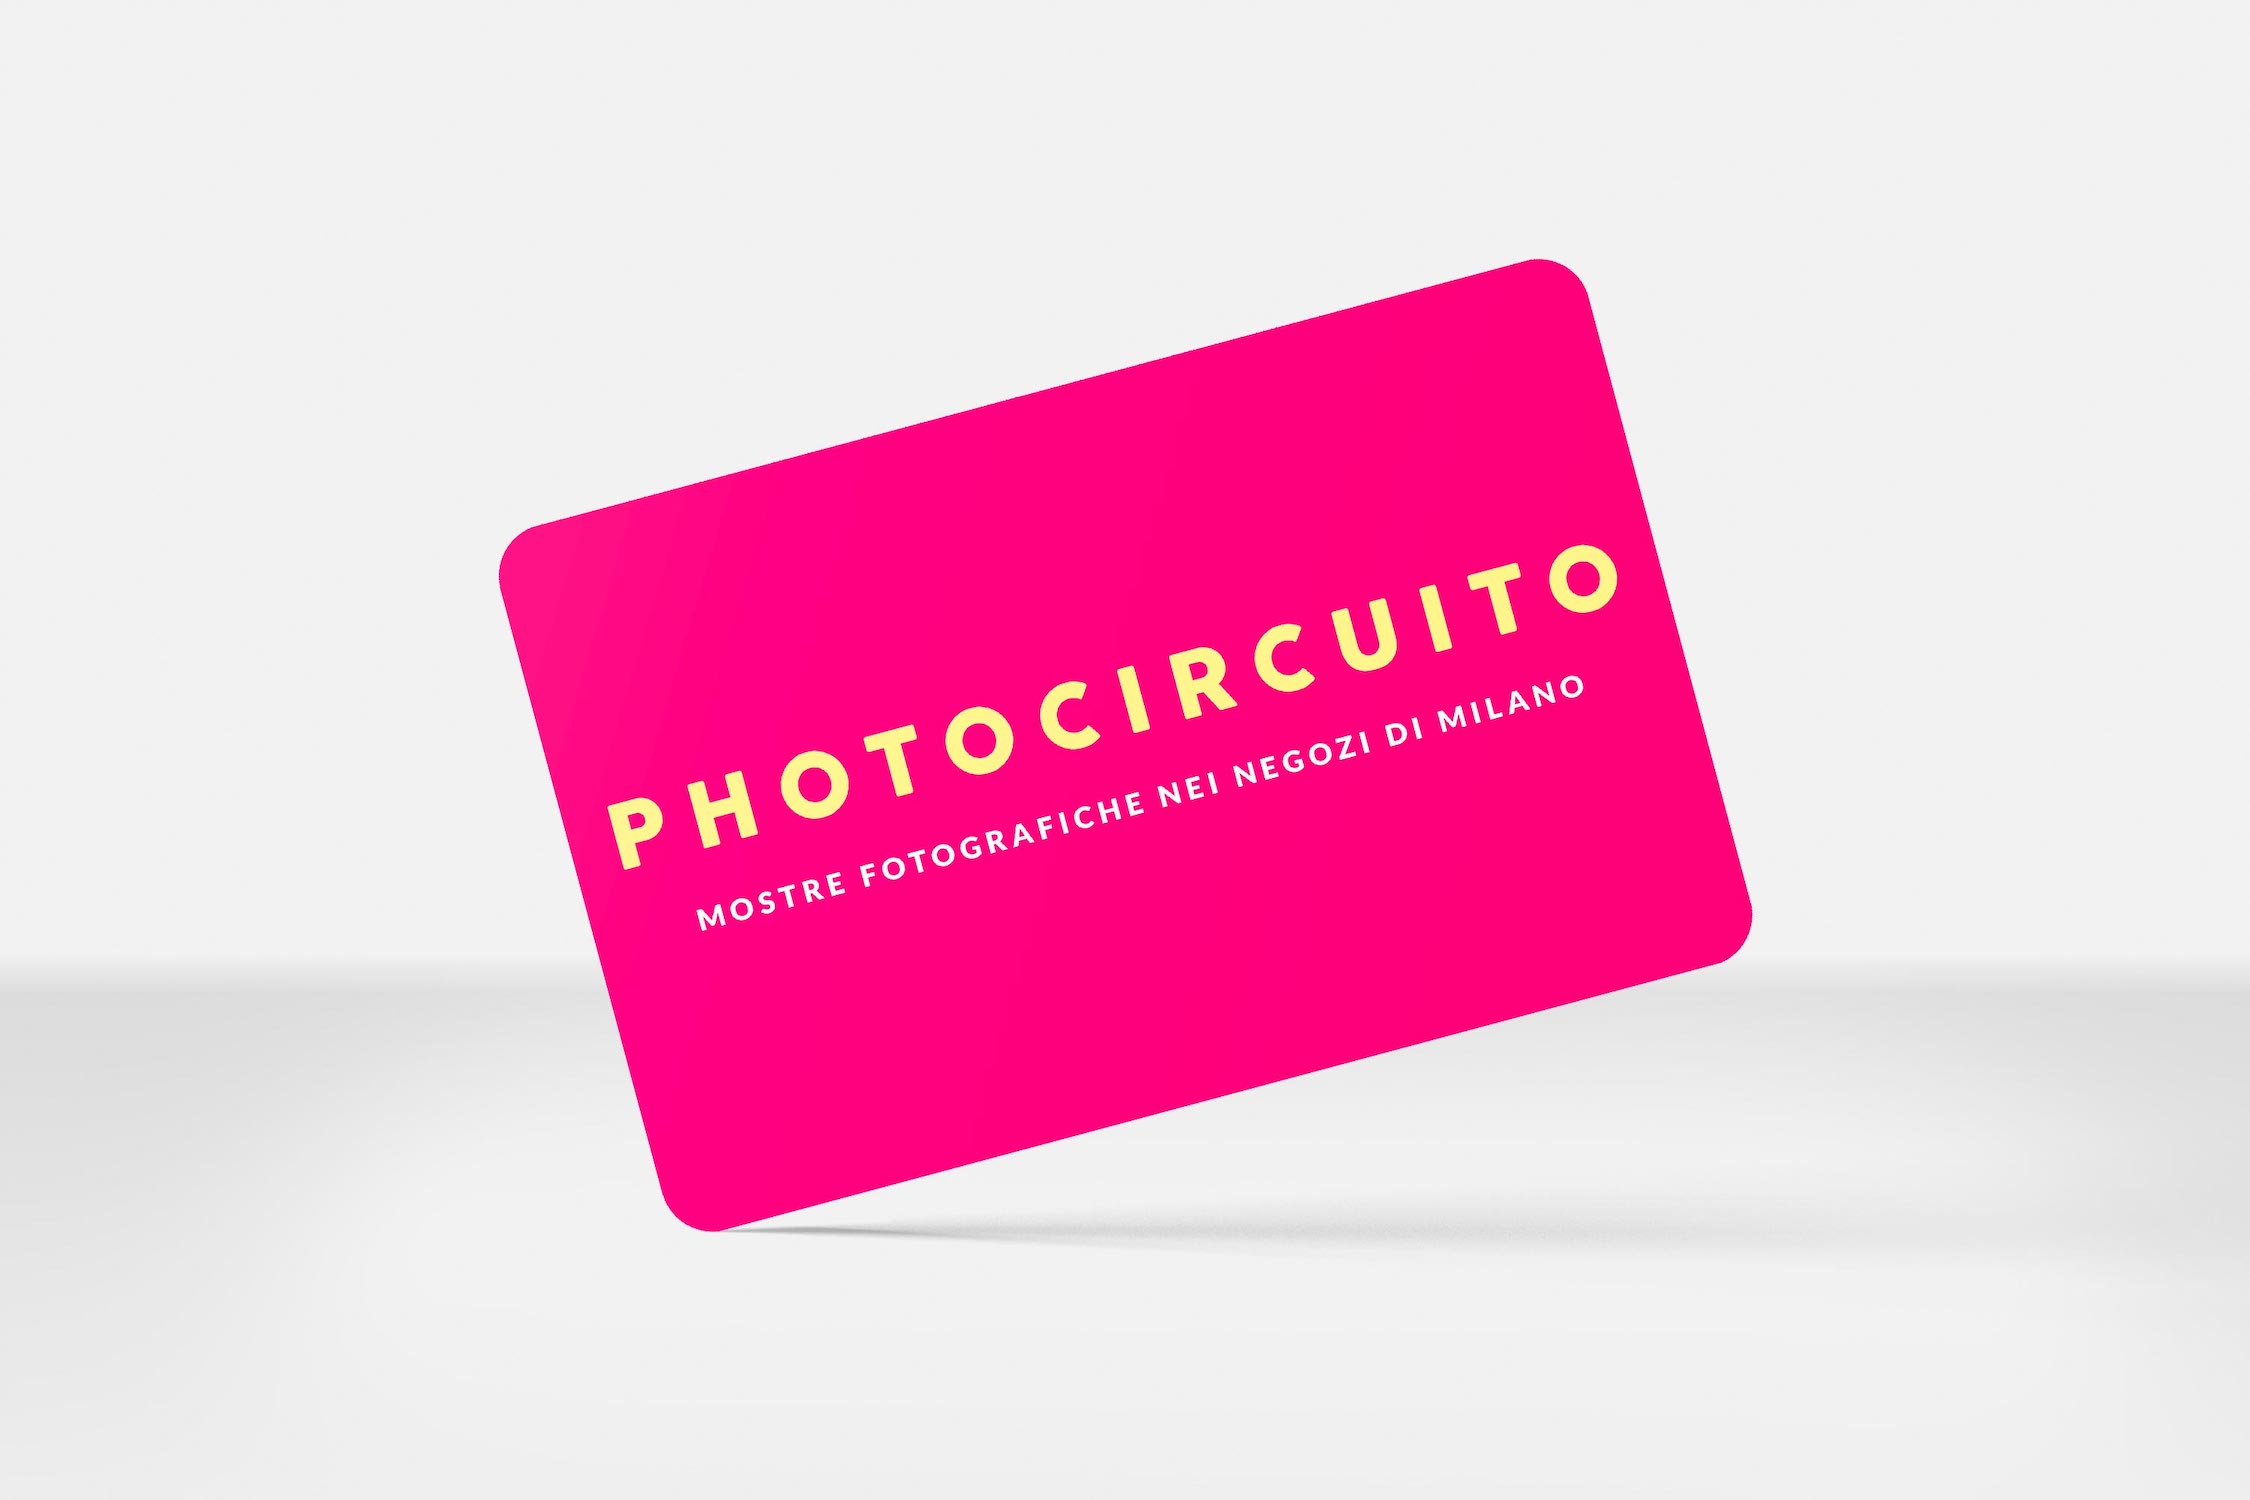 Grafica card evento PhotoCircuito